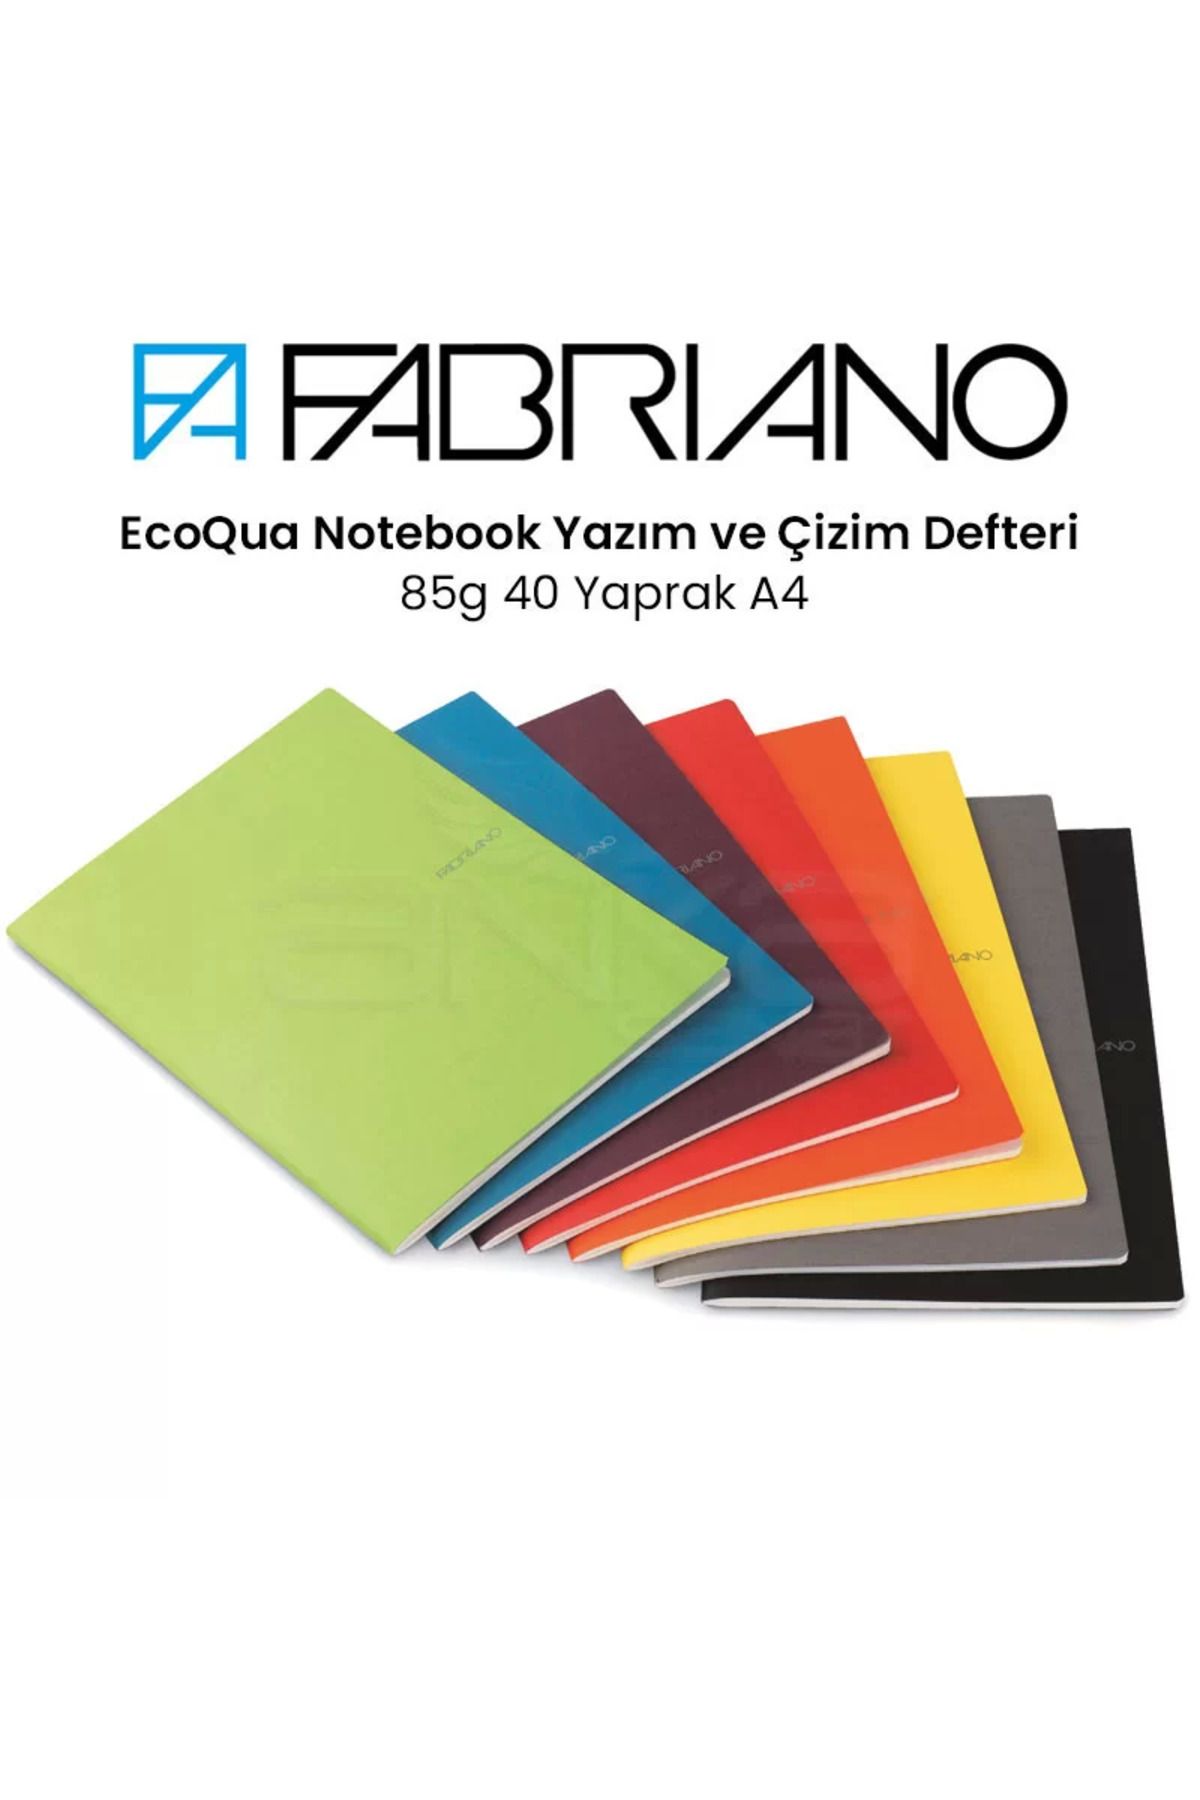 Fabriano EcoQua Notebook Yazım ve Çizim Defteri 85g 40 Yaprak A4